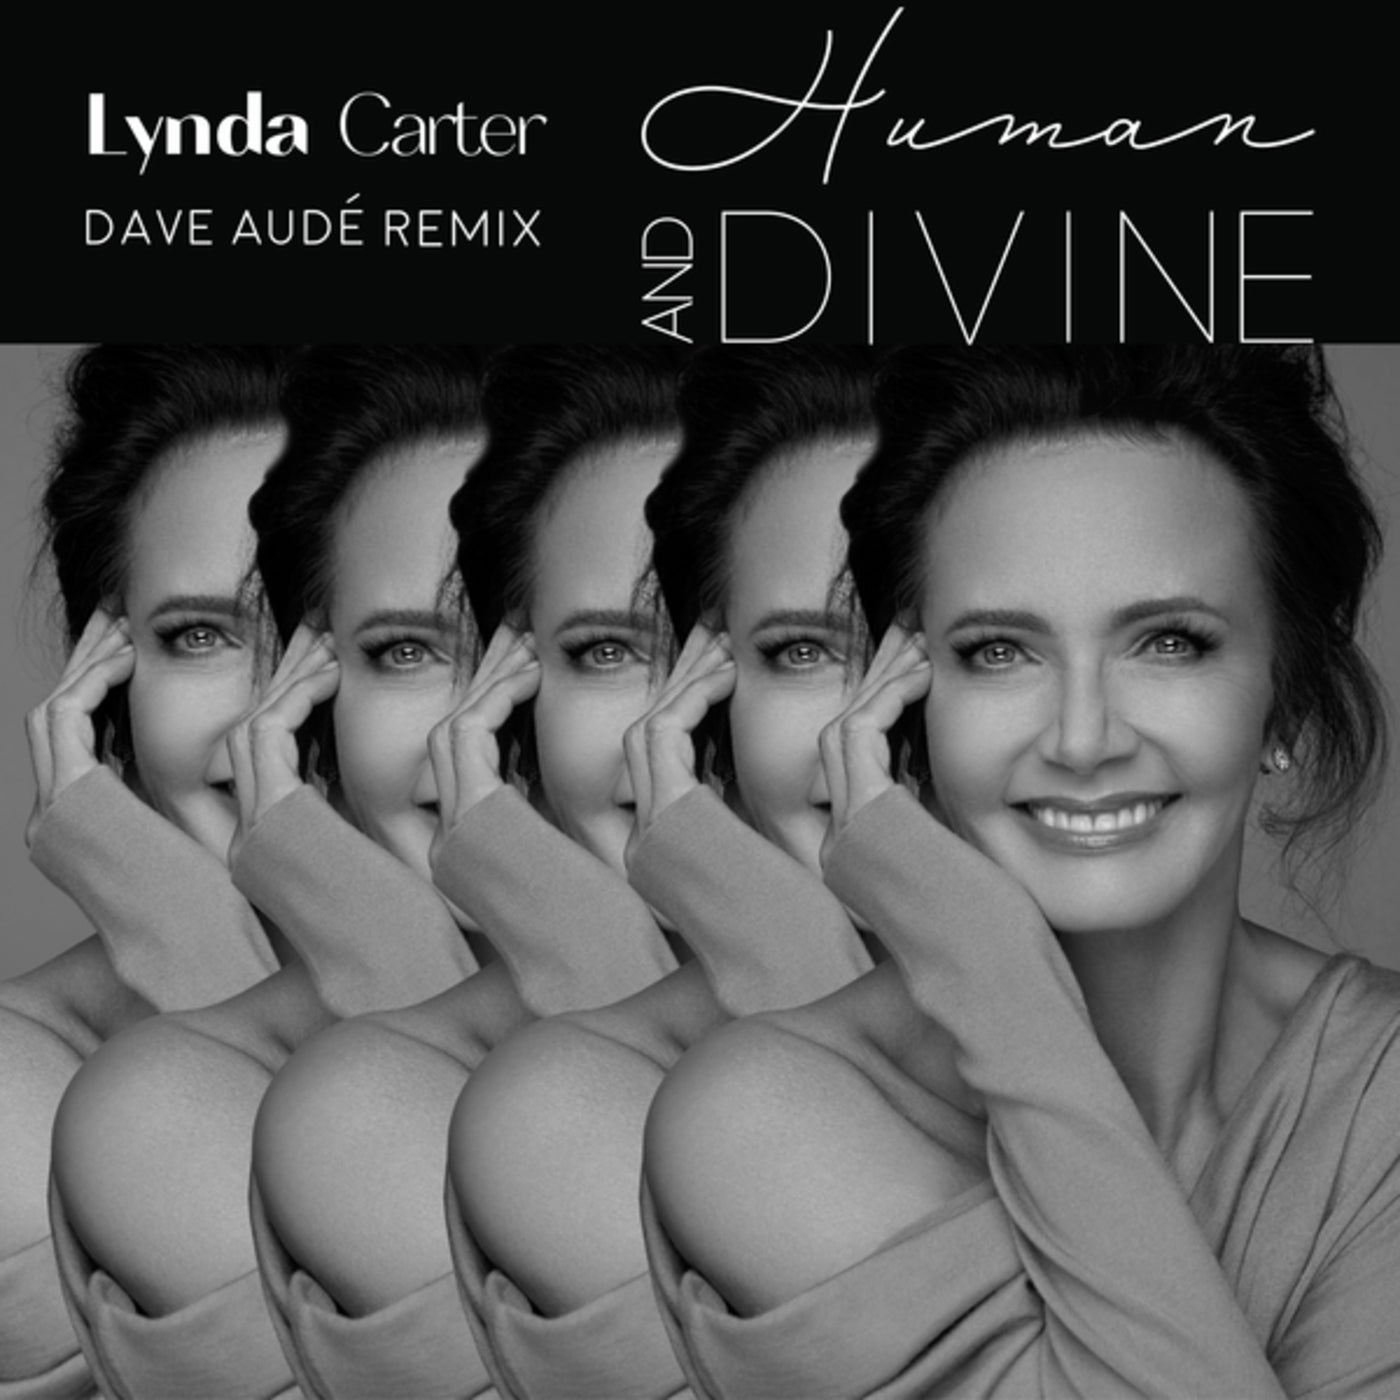 Human and Divine / Dave Audé Remix